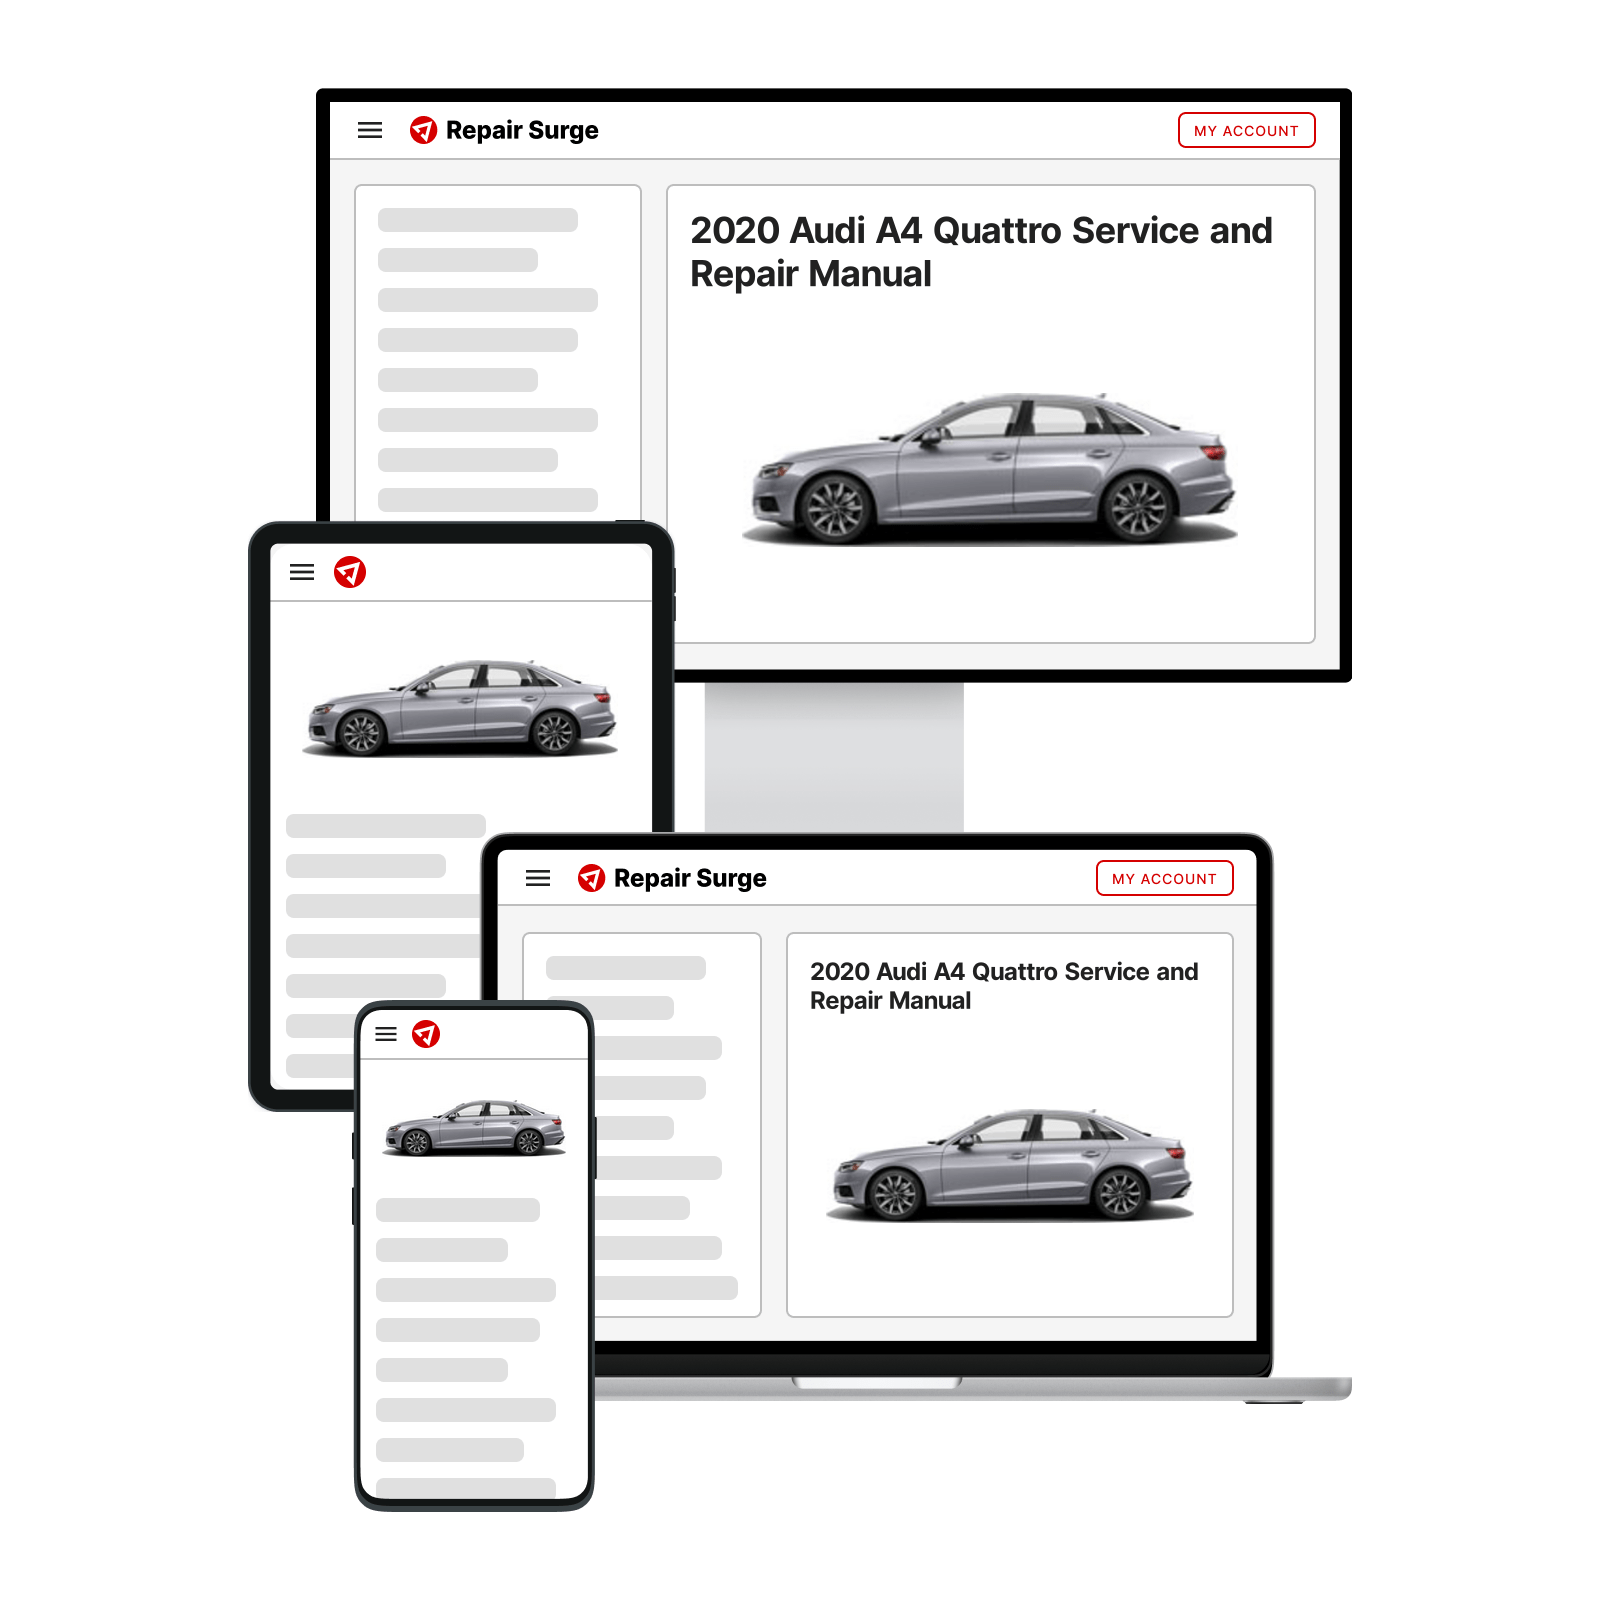 2020 Audi A4 Quattro service and repair manual hero image